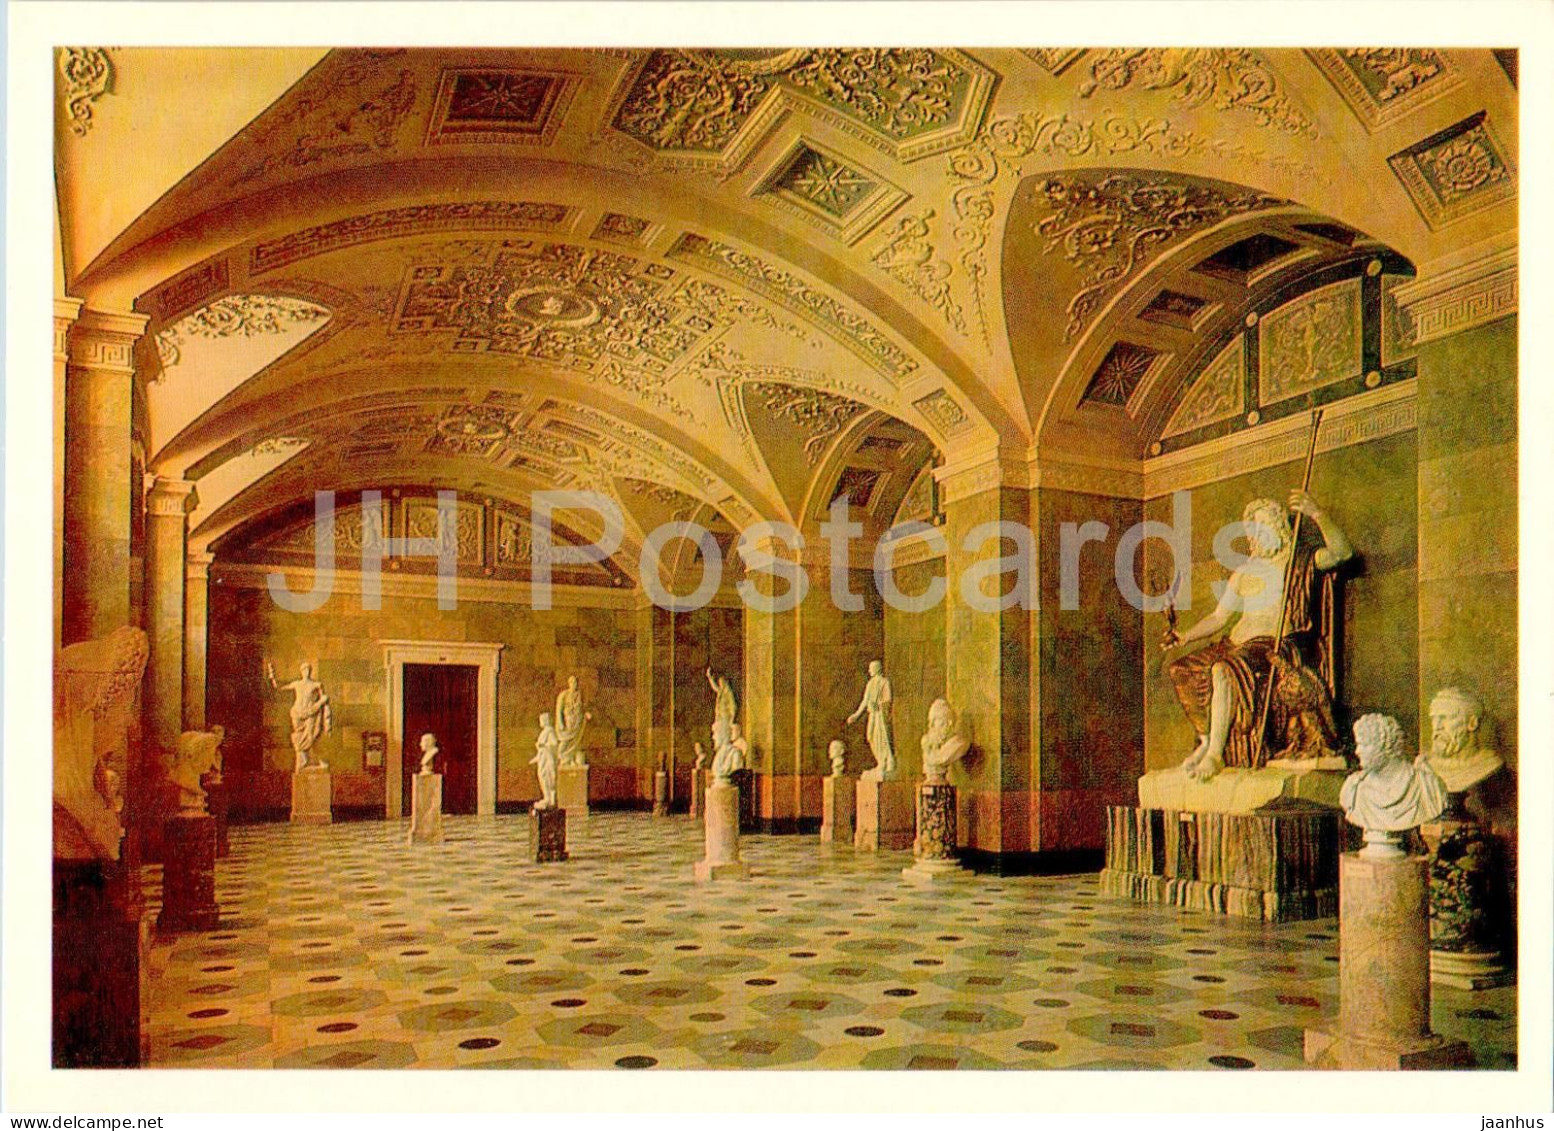 Leningrad - St Petersburg - The Jupiter Room In The New Hermitage - Museum - 1984 - Russia USSR - Unused - Russie